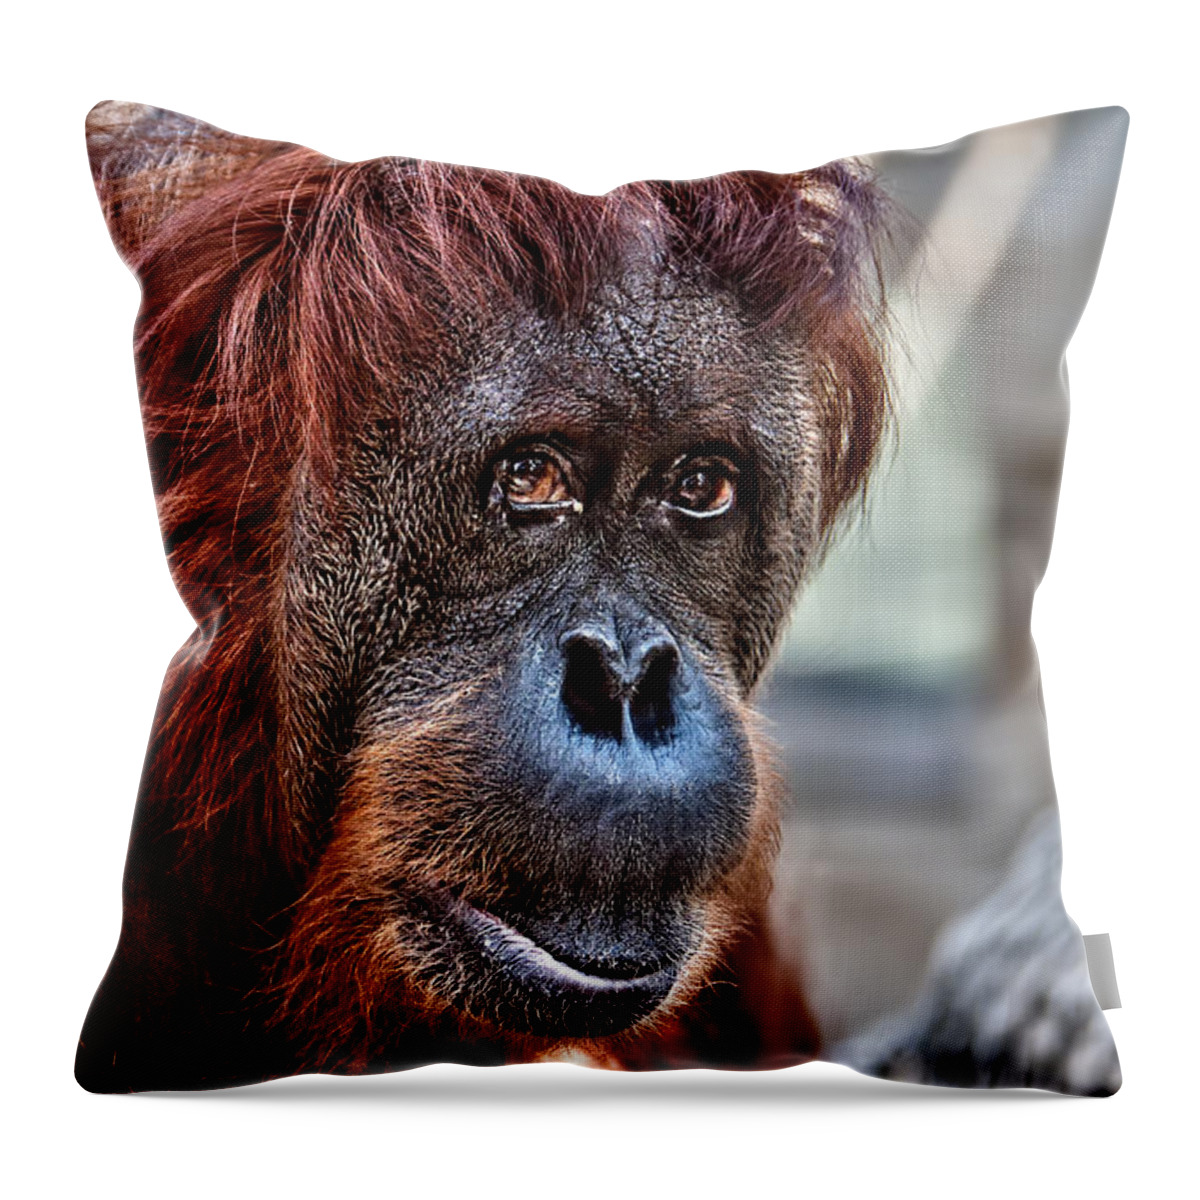 Affen Throw Pillow featuring the photograph OrangUtan by Joerg Lingnau